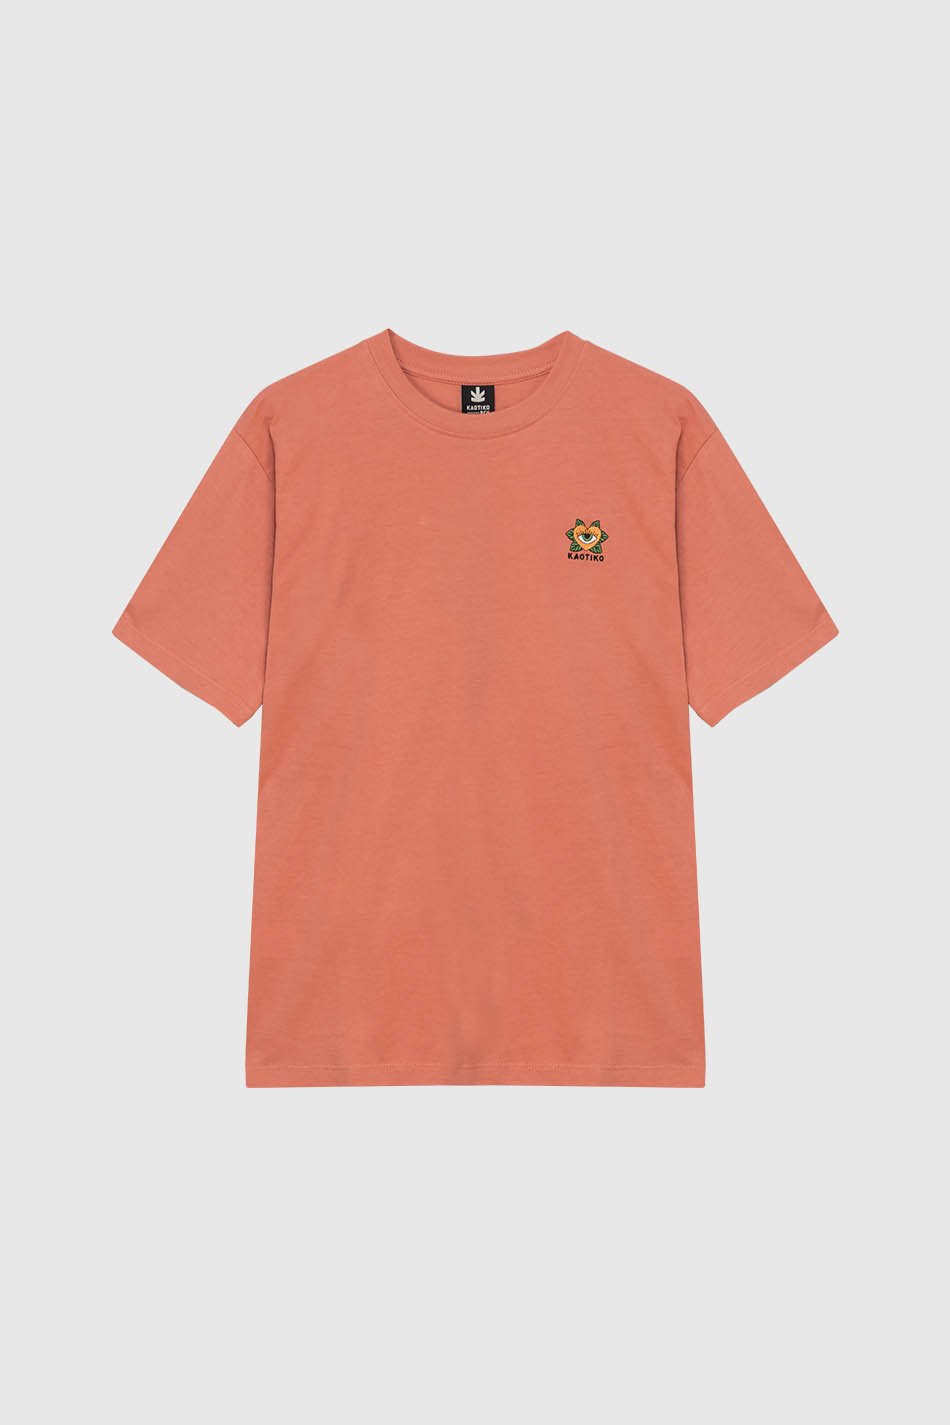 T-Shirt Heart Salmon